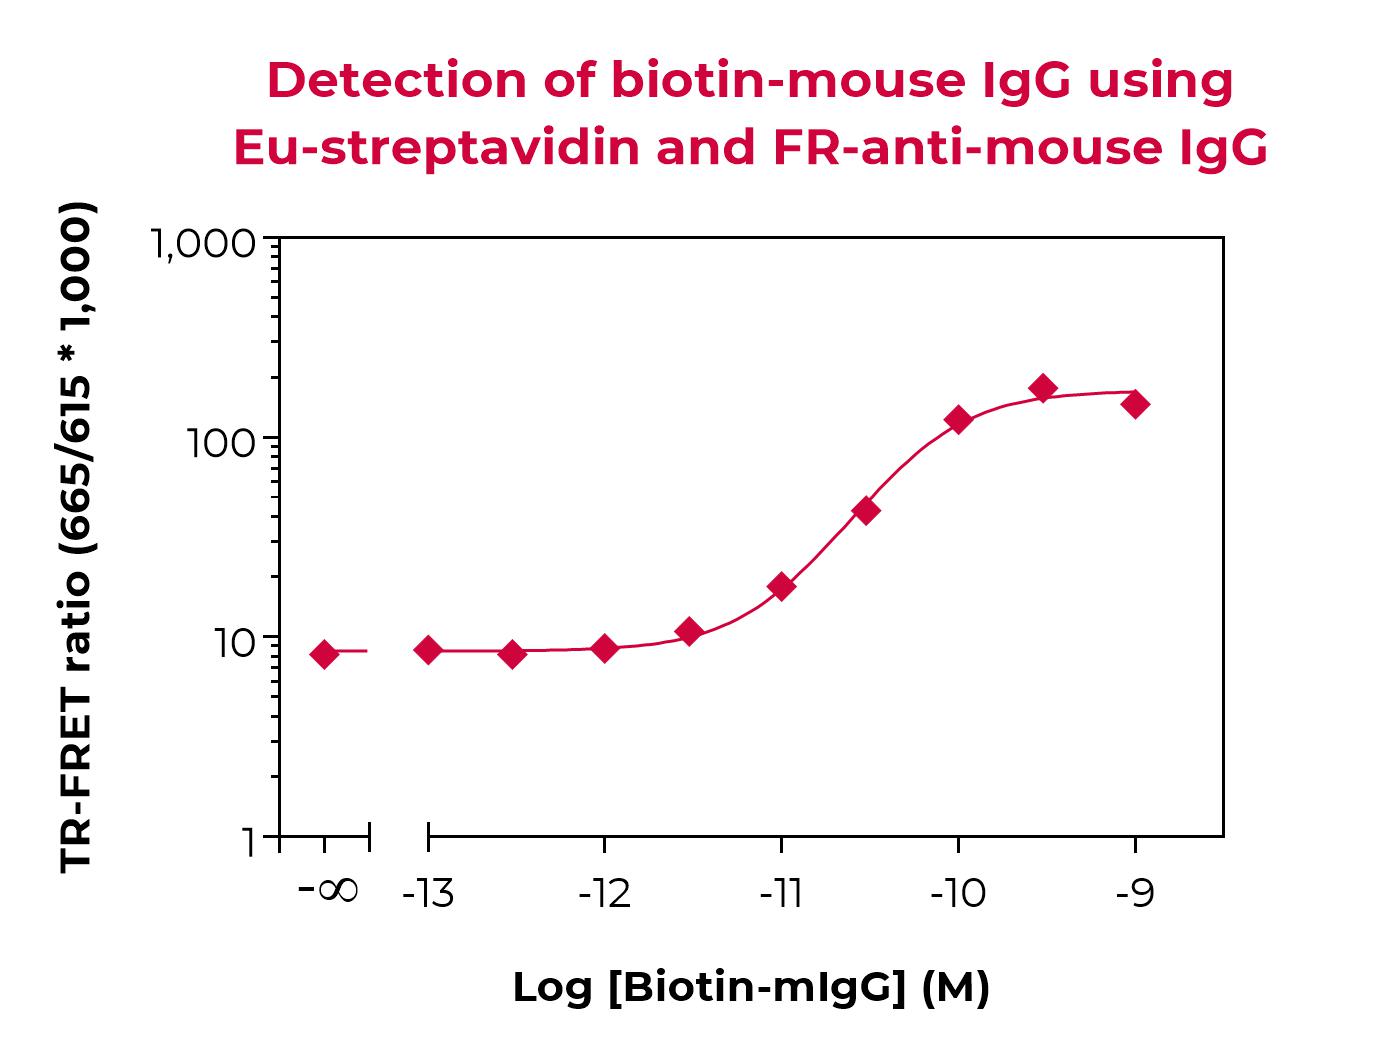 FR-anti-mouse IgG validation